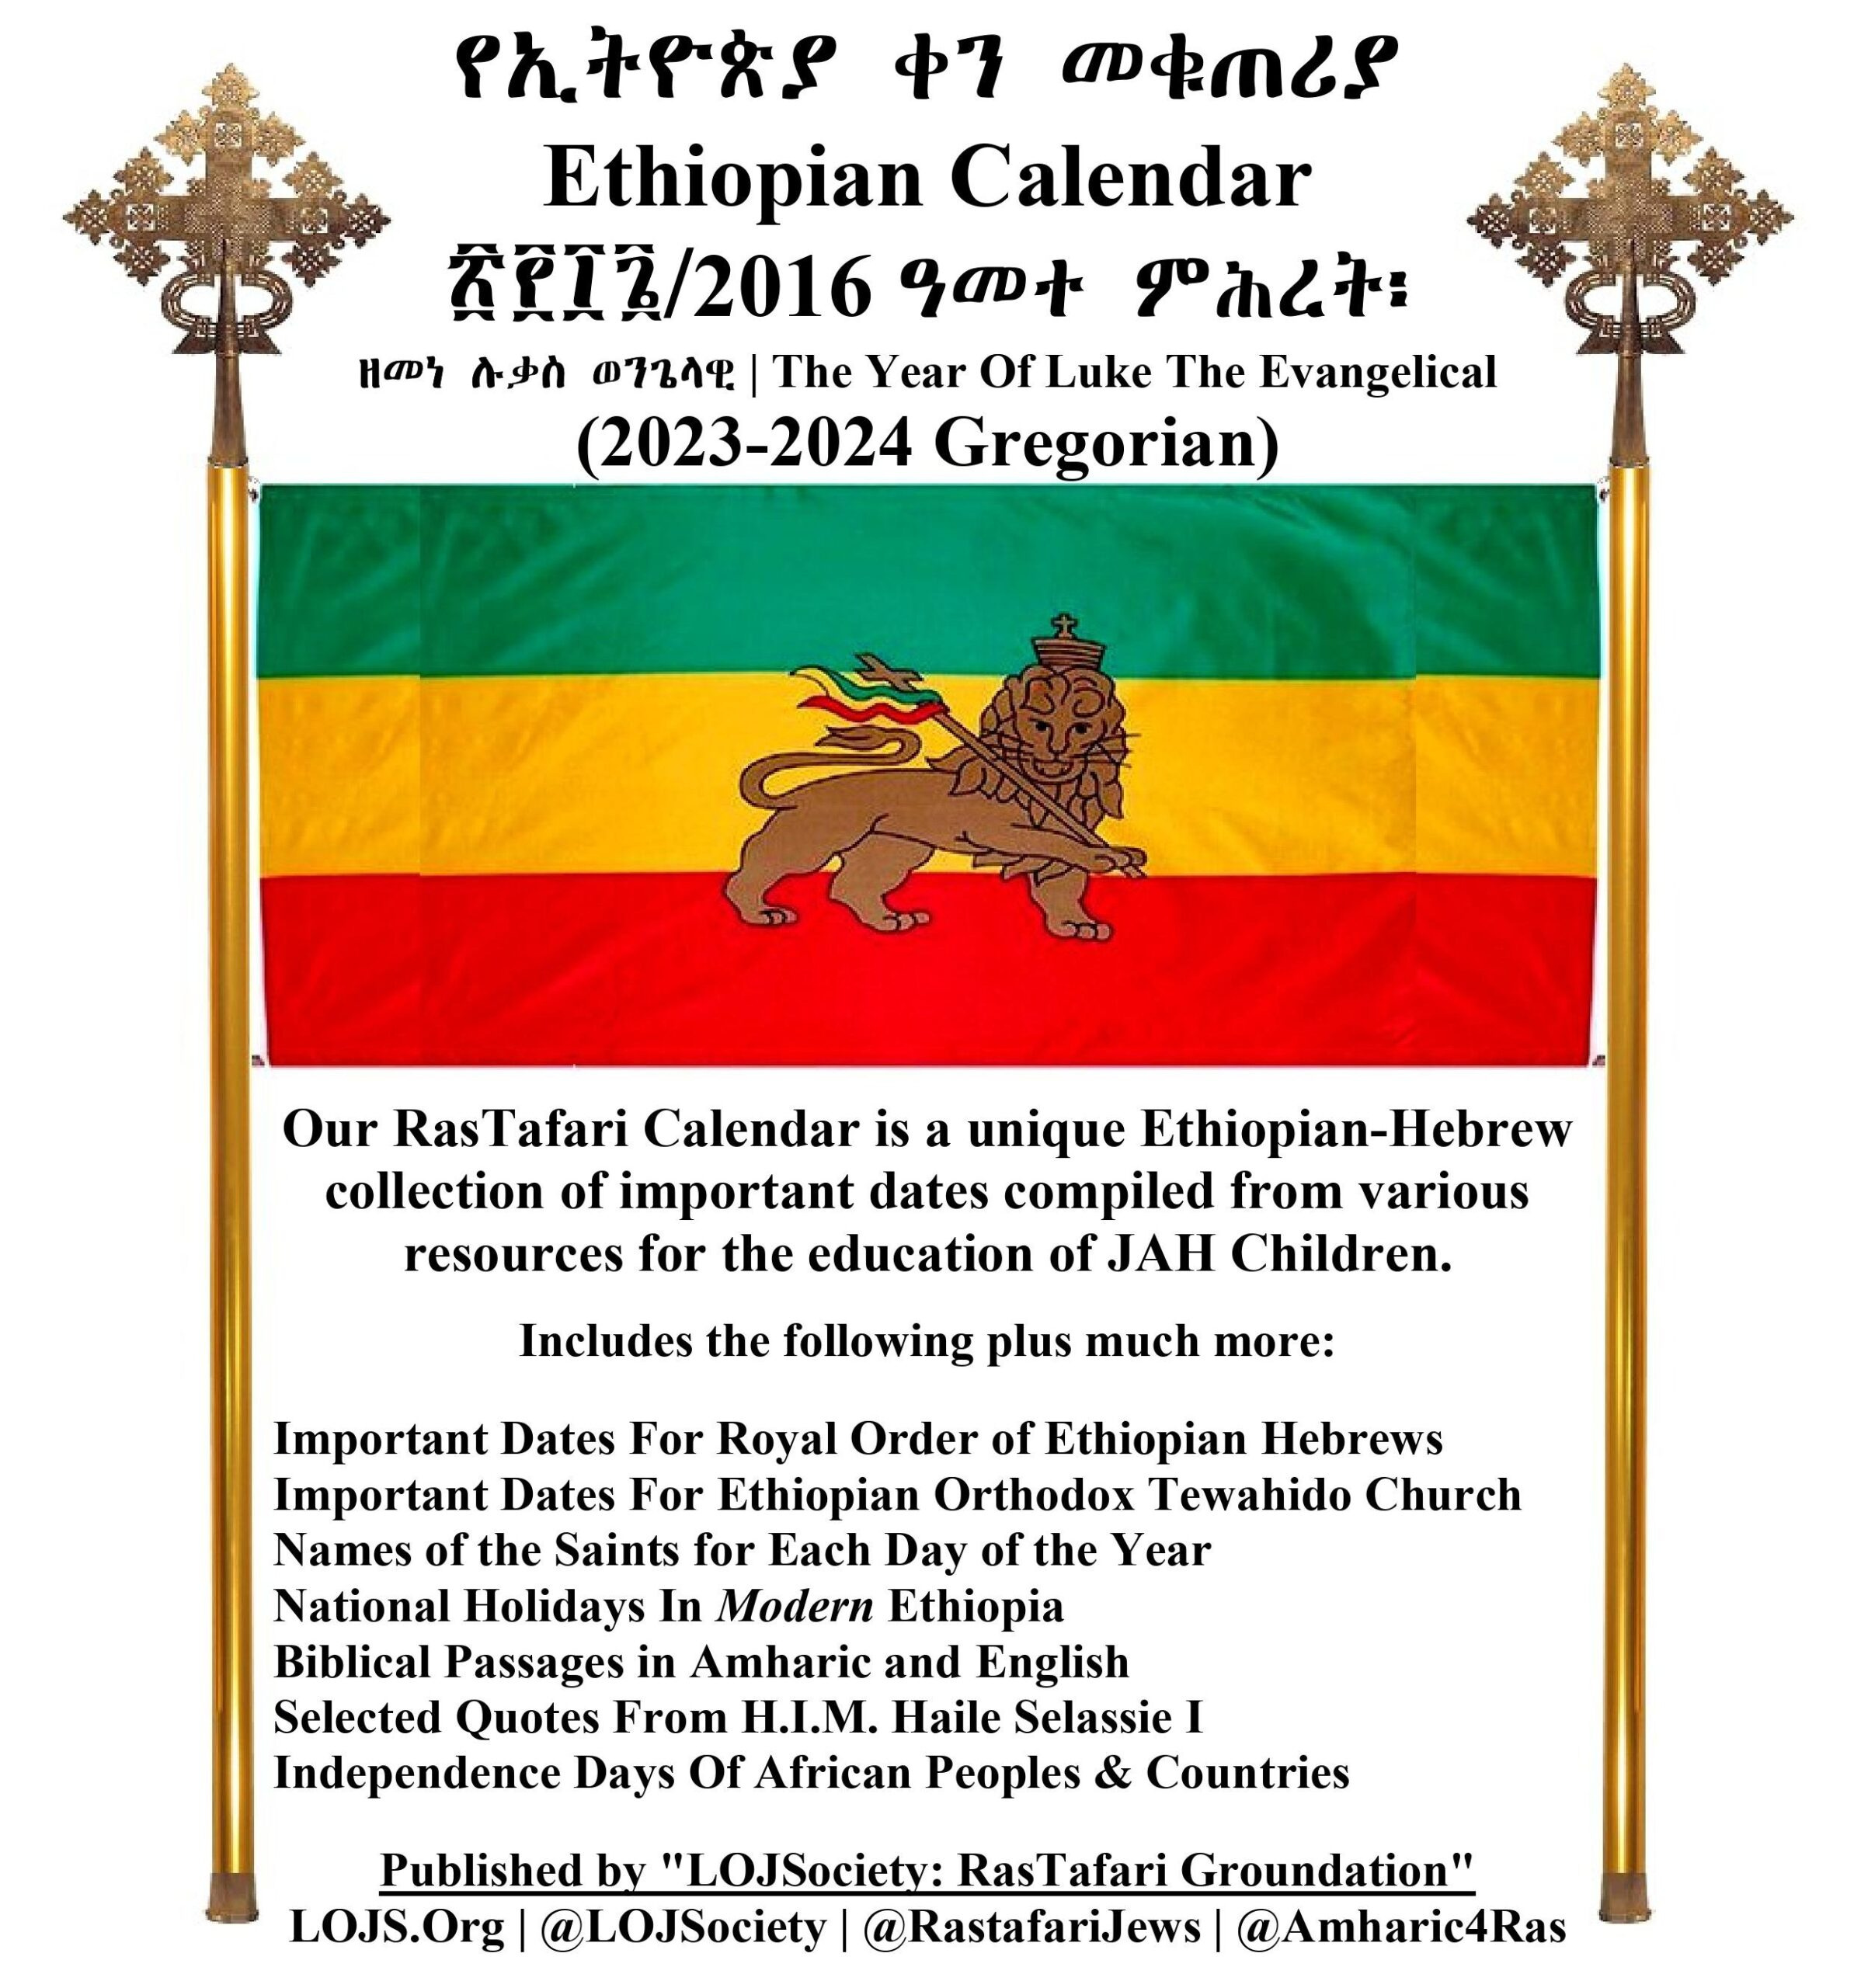 Ethiopian Calendar 2016 - Rastafari Groundation Compilation 2023 throughout July 23 2024 In Ethiopian Calendar